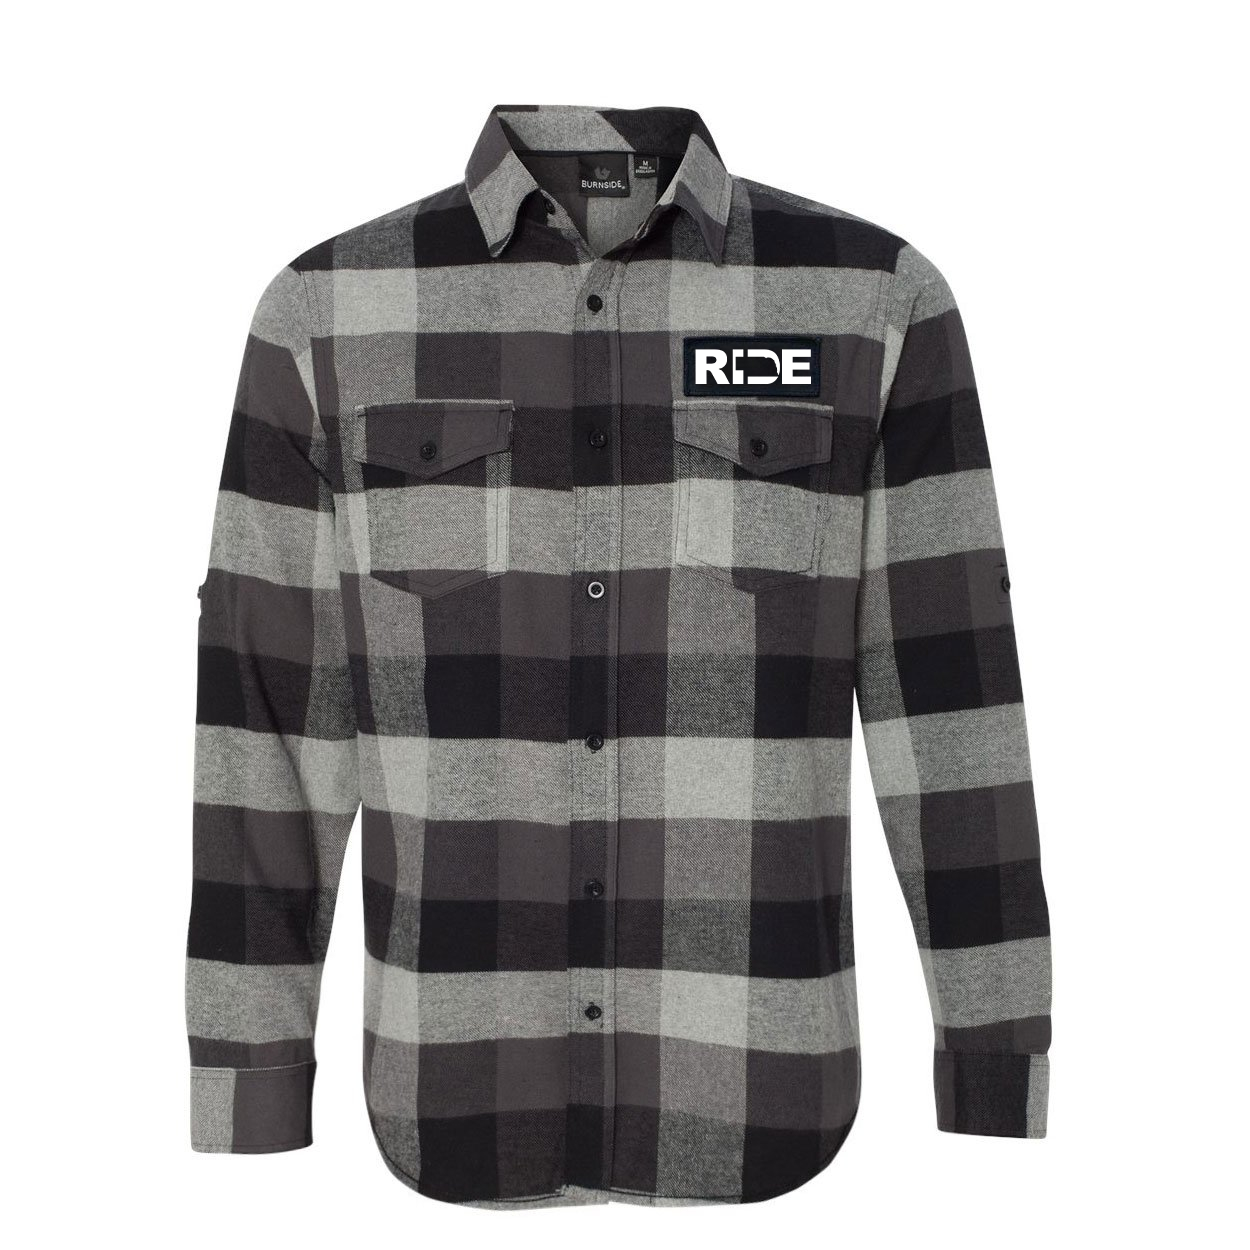 Ride Nebraska Classic Unisex Long Sleeve Woven Patch Flannel Shirt Black/Gray (White Logo)